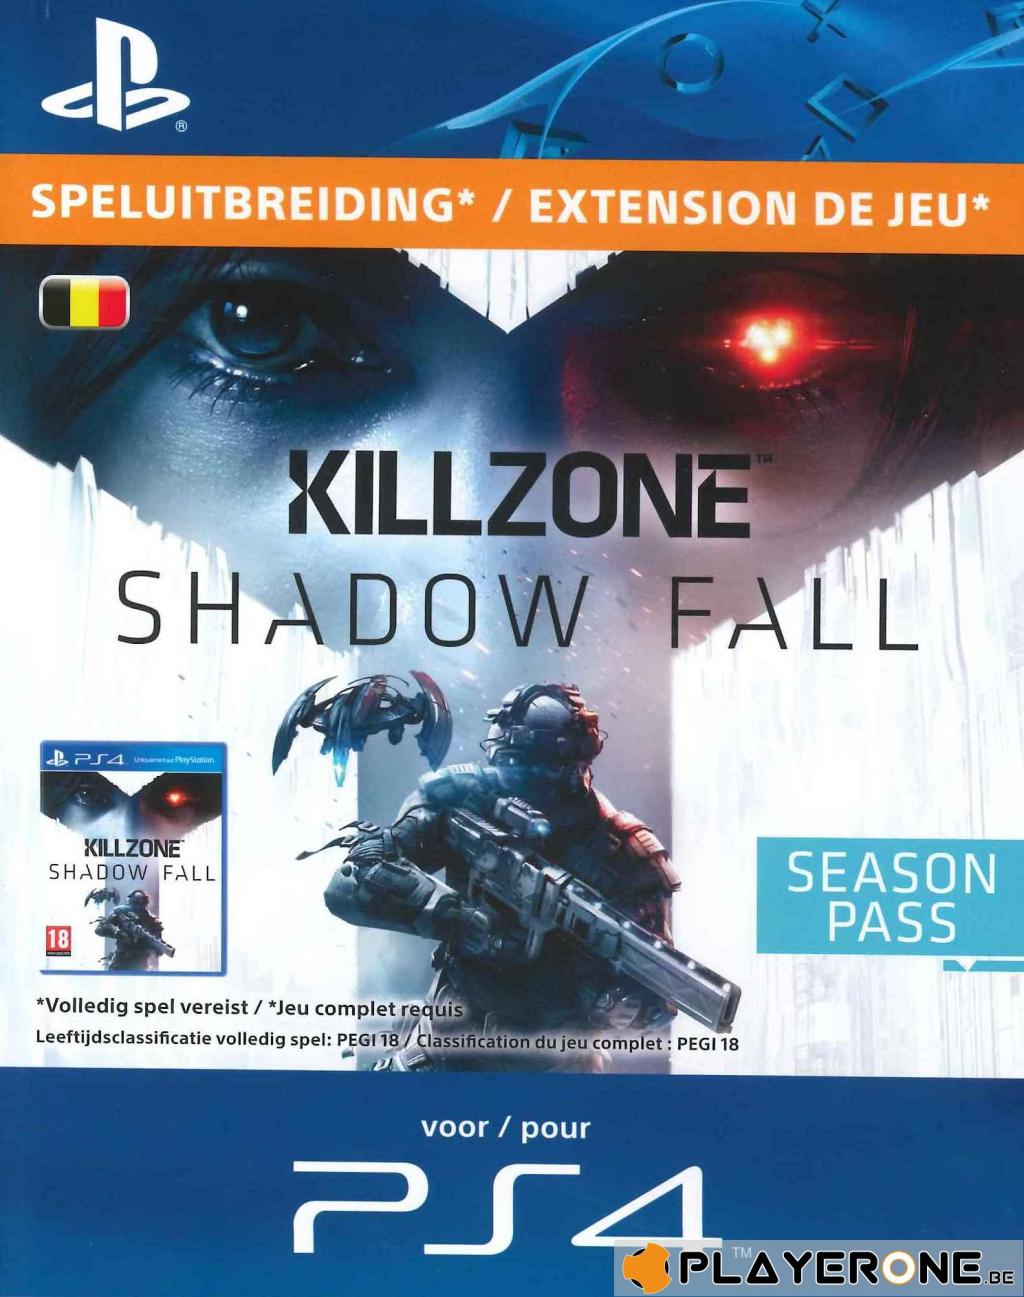 Playstation Network - Killzone Shadow Fall Season Pass (Belgium Only)